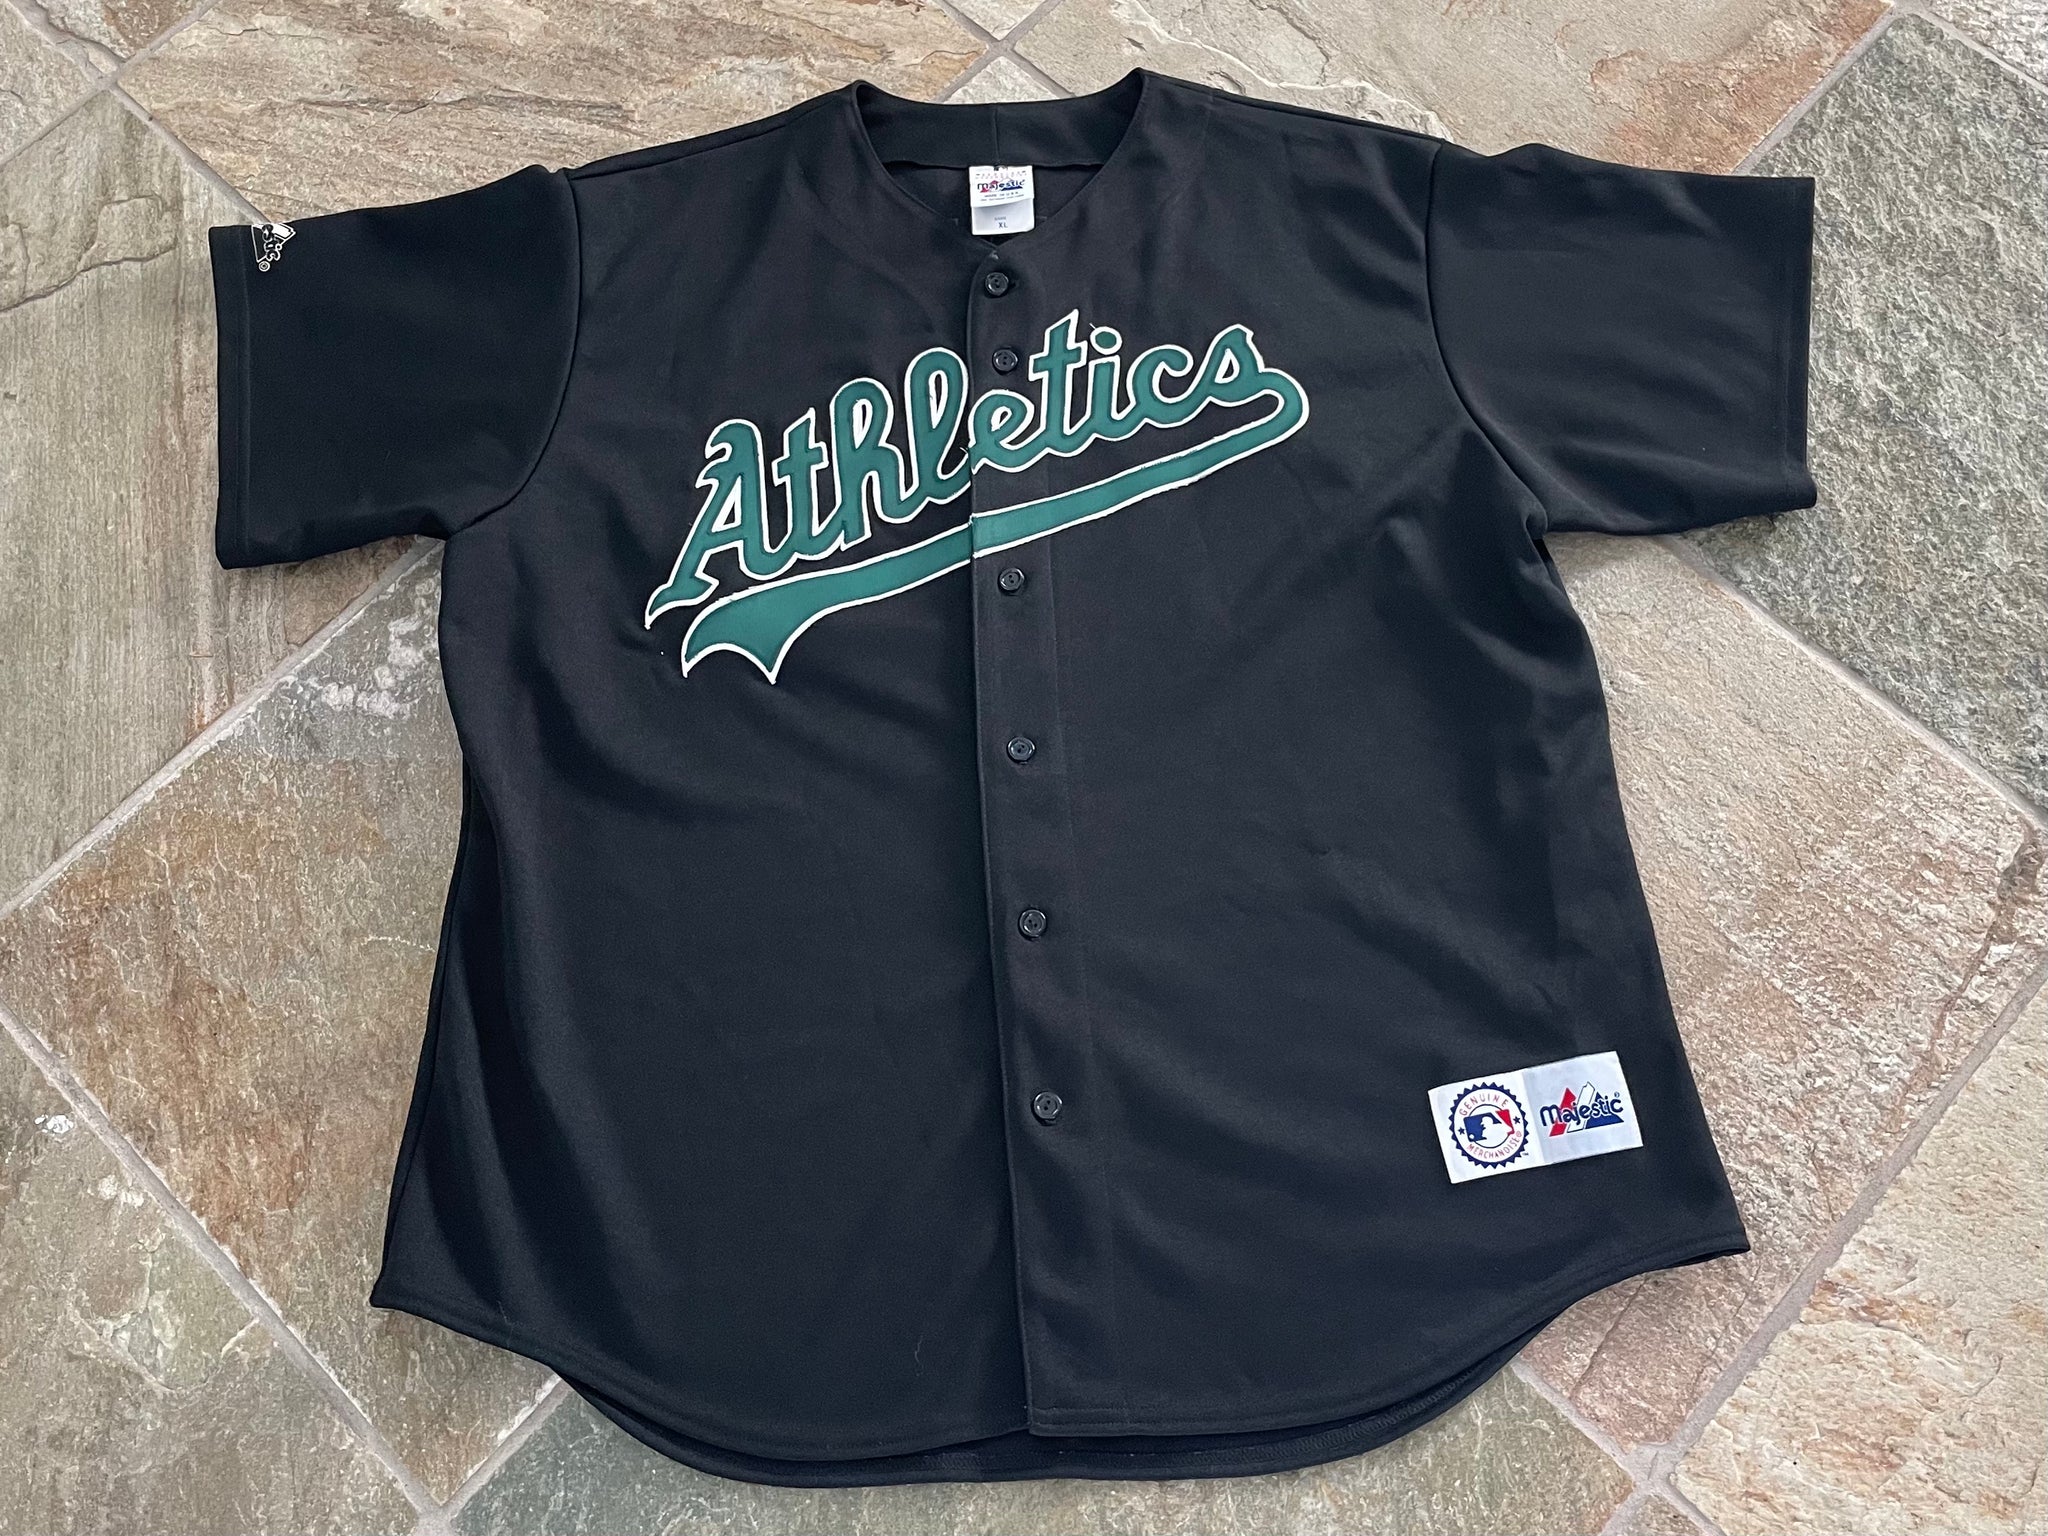 Oakland Athletics A's Majestic Jersey Large Black MLB Sewn Stitched Made USA